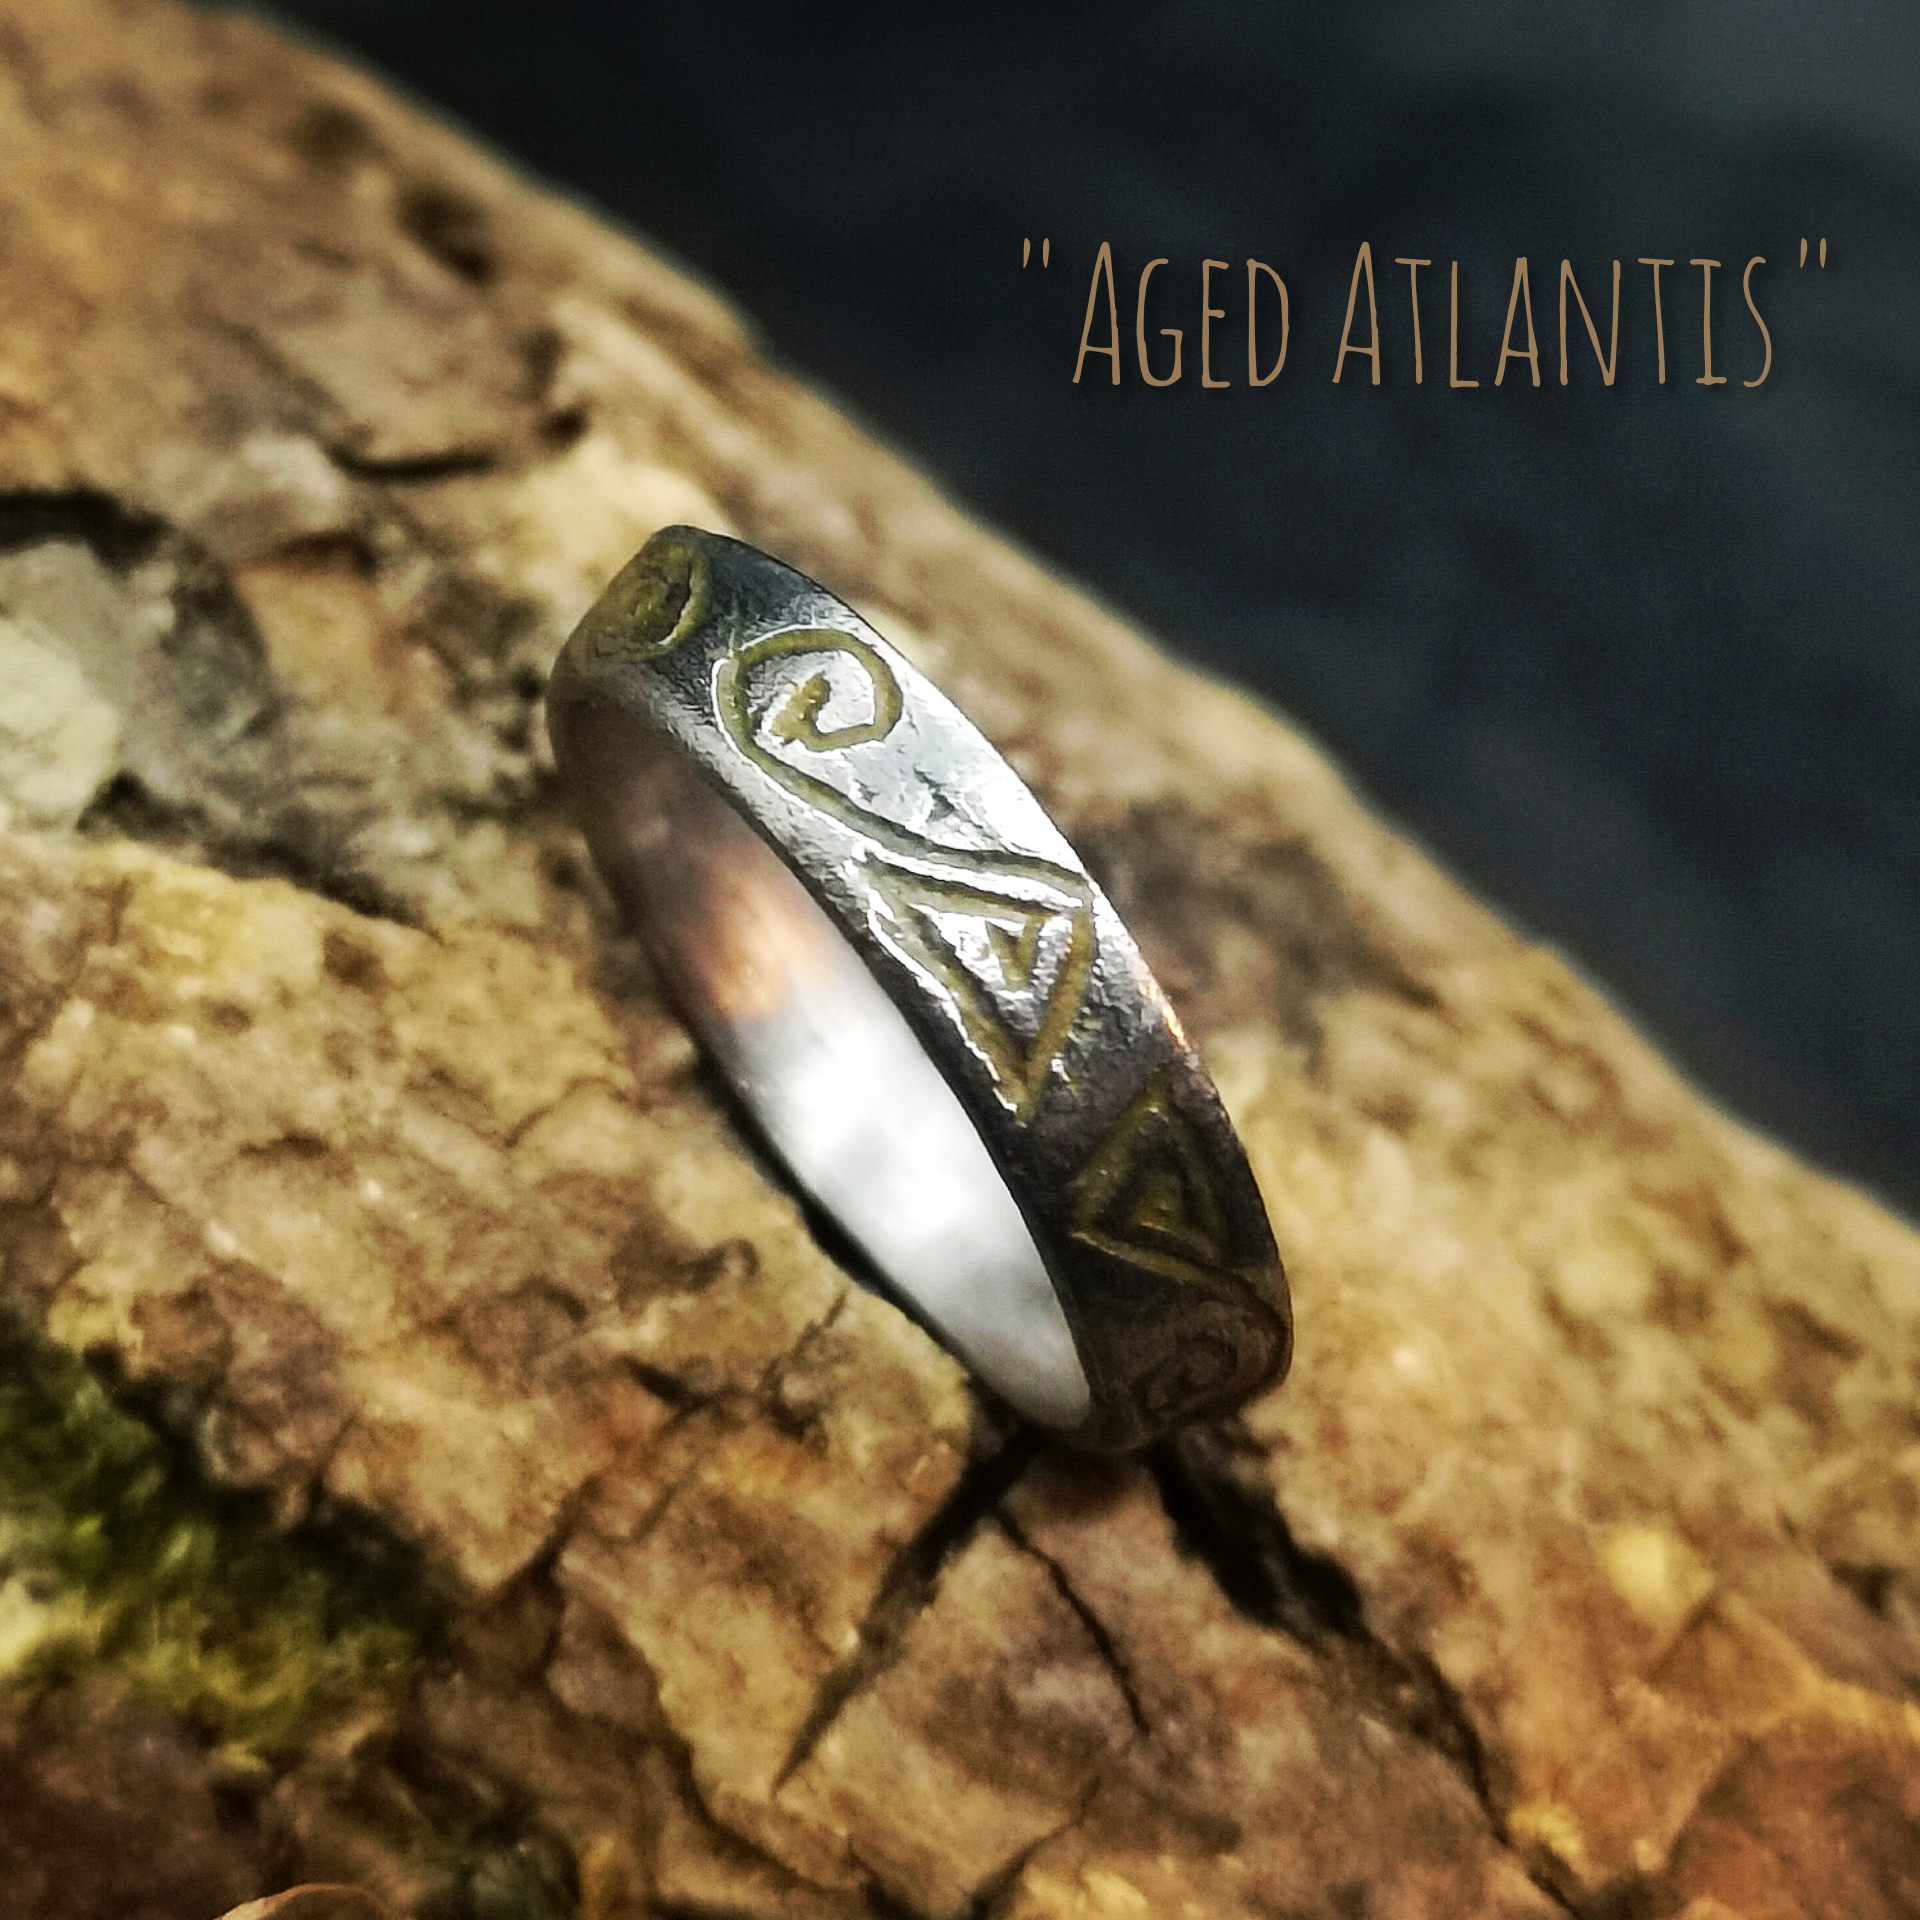 "Aged Atlantis"